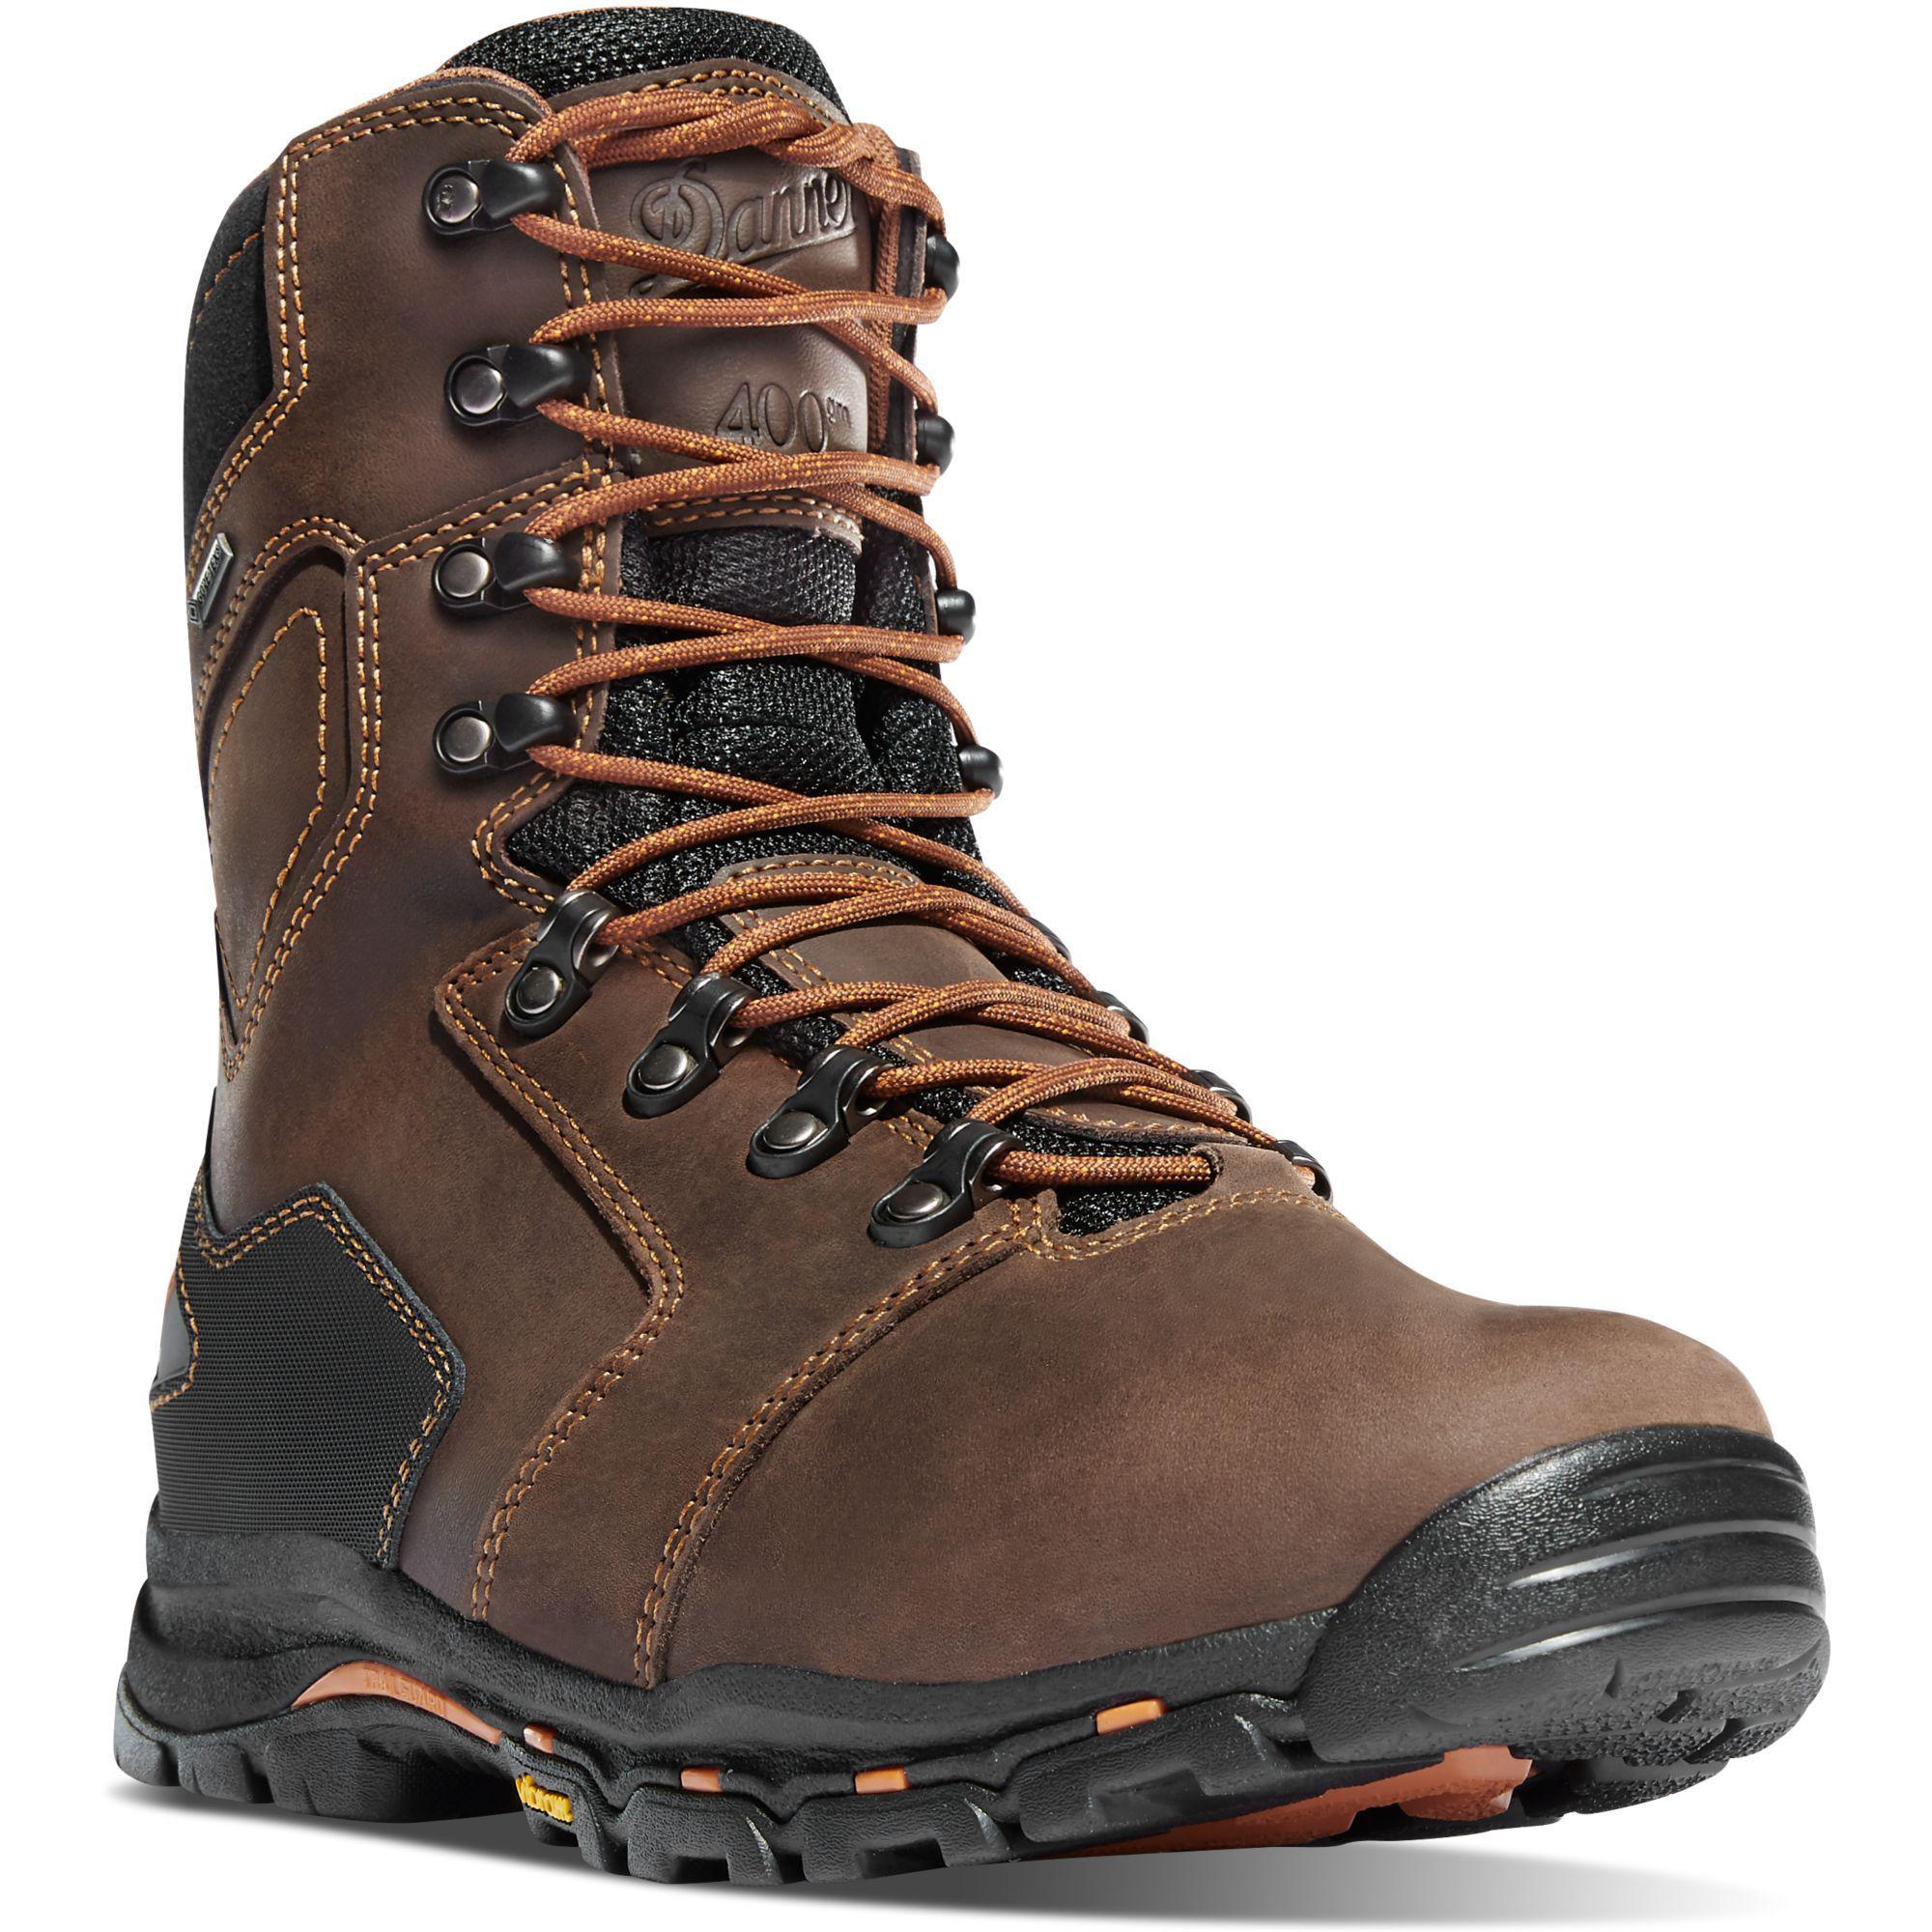 Danner Men's Vicious 8" Comp Toe Insulated WP Work Boot Brown - 13874 7 / Medium / Brown - Overlook Boots